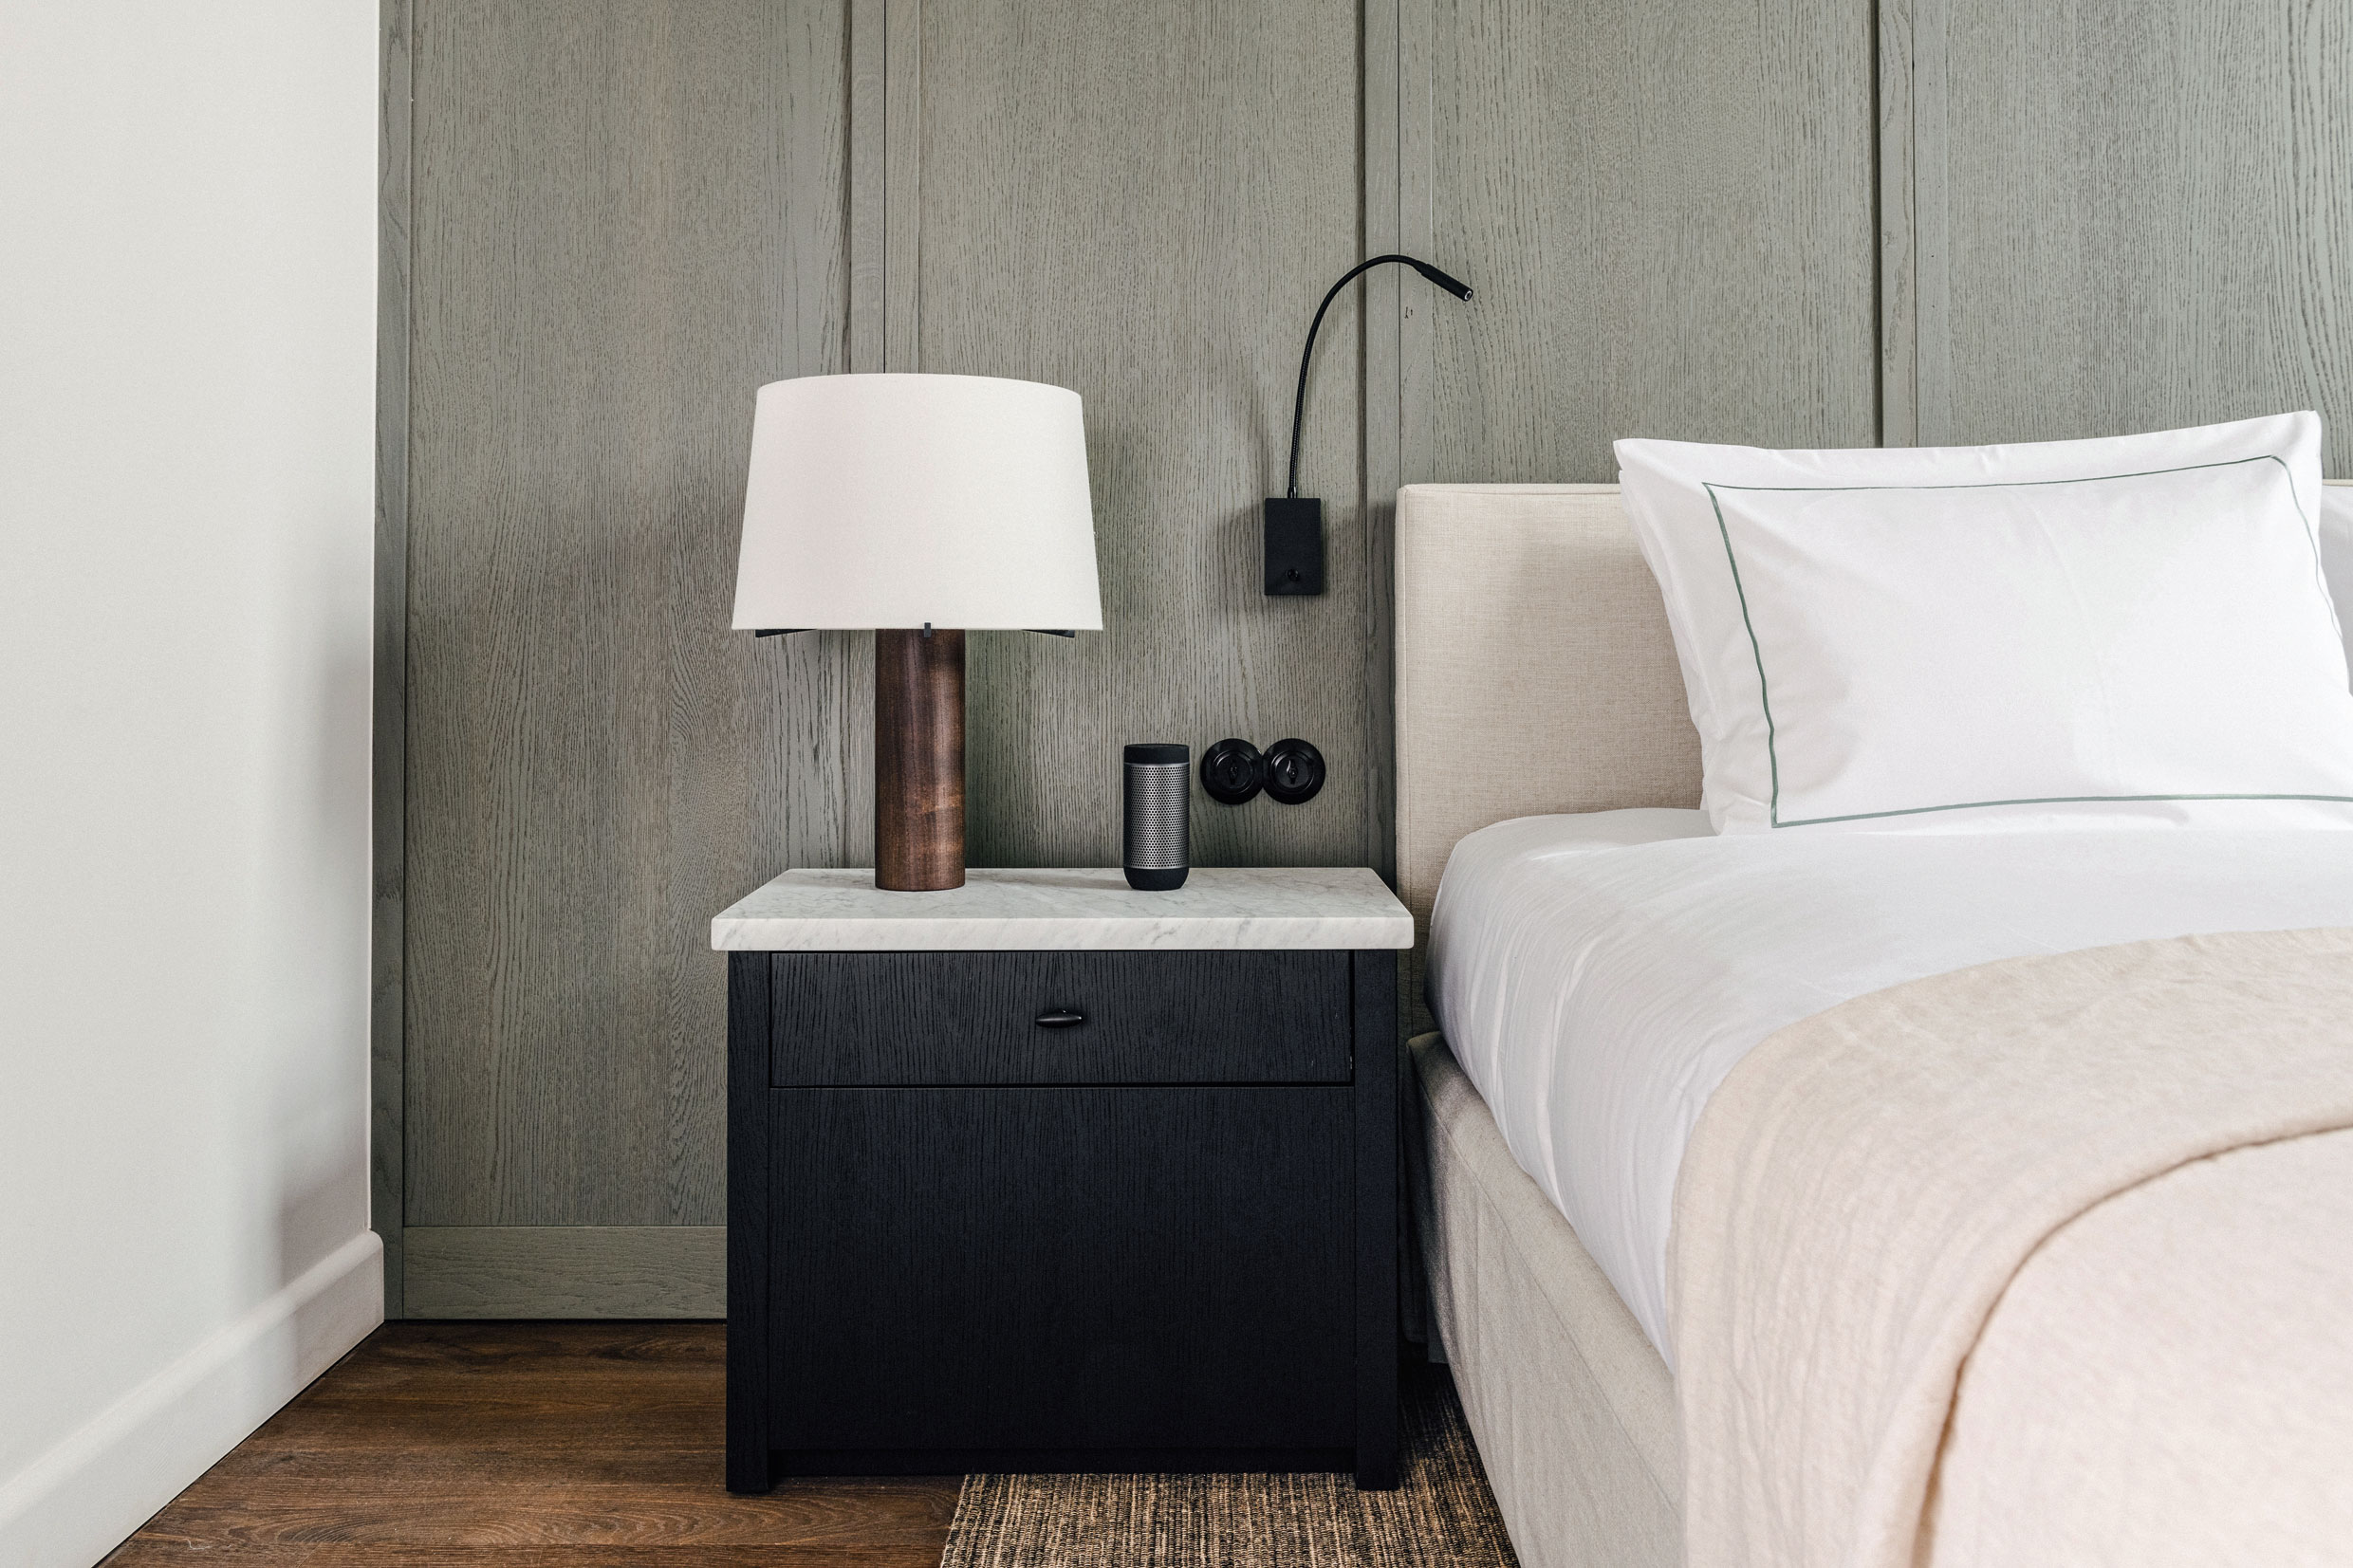 august hotel  by vincent van duysen architect interior design bedrooms